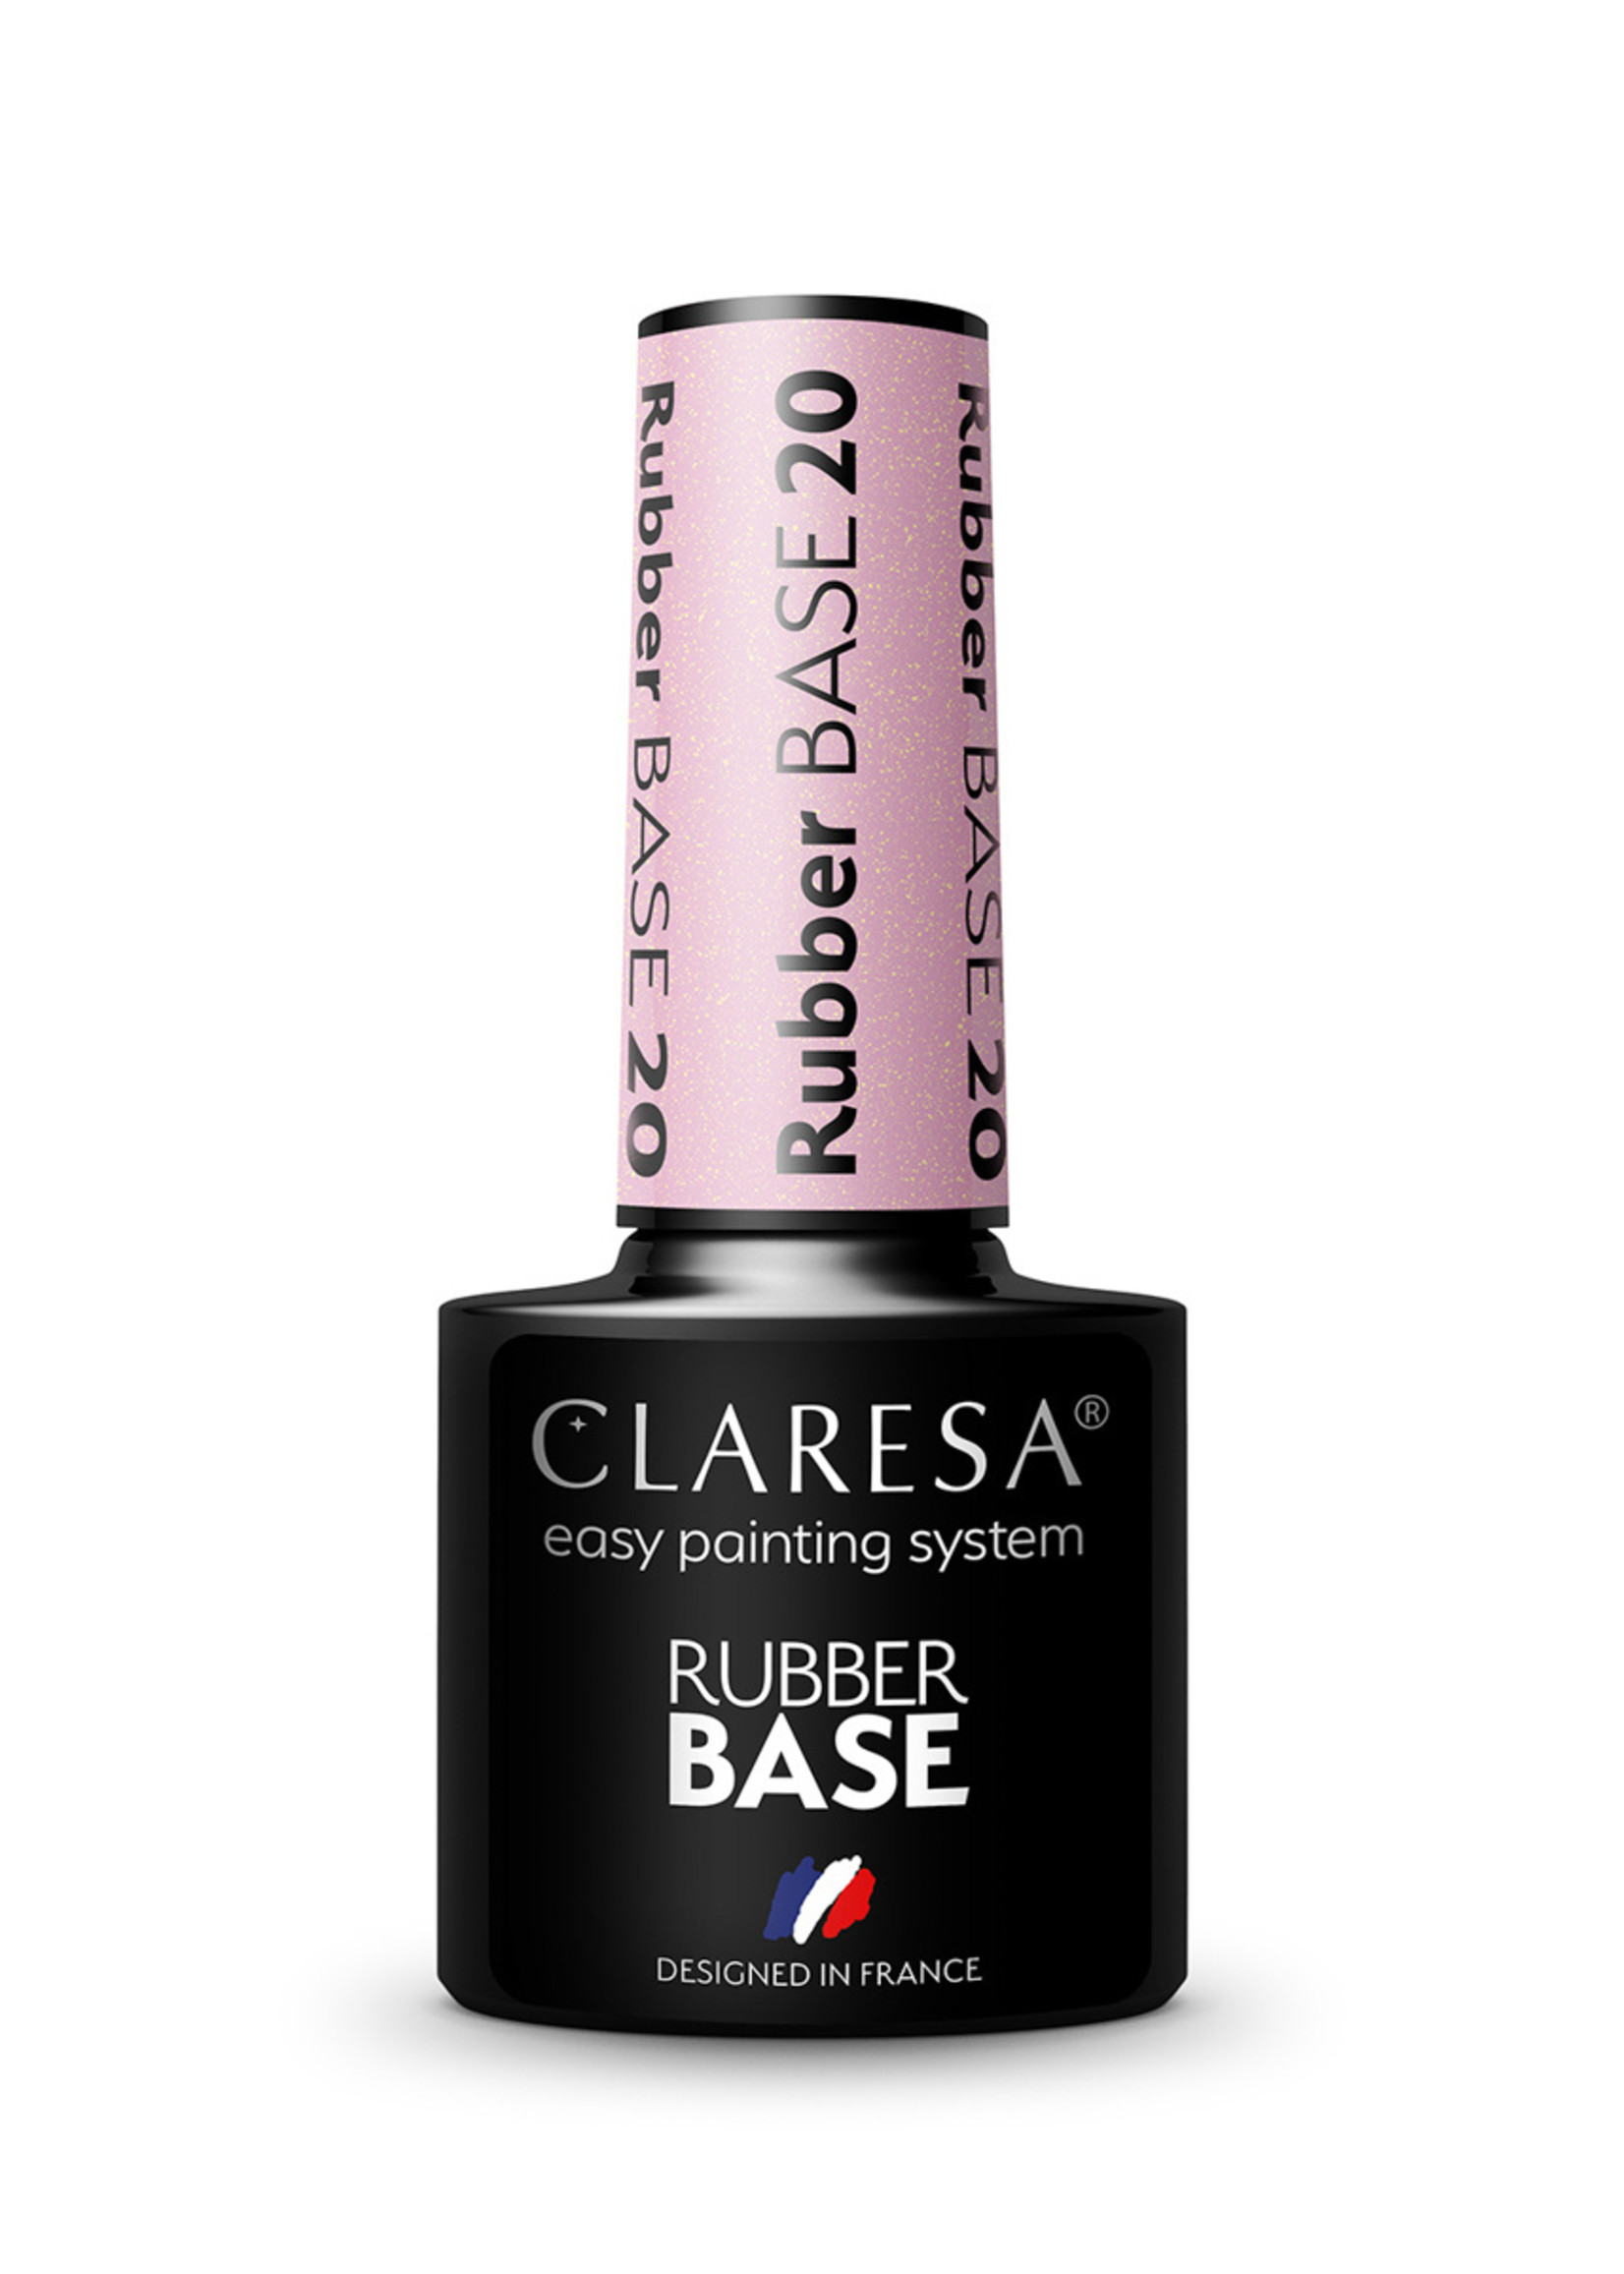 CLARESA CLARESA RUBBER BASE 20 -5g